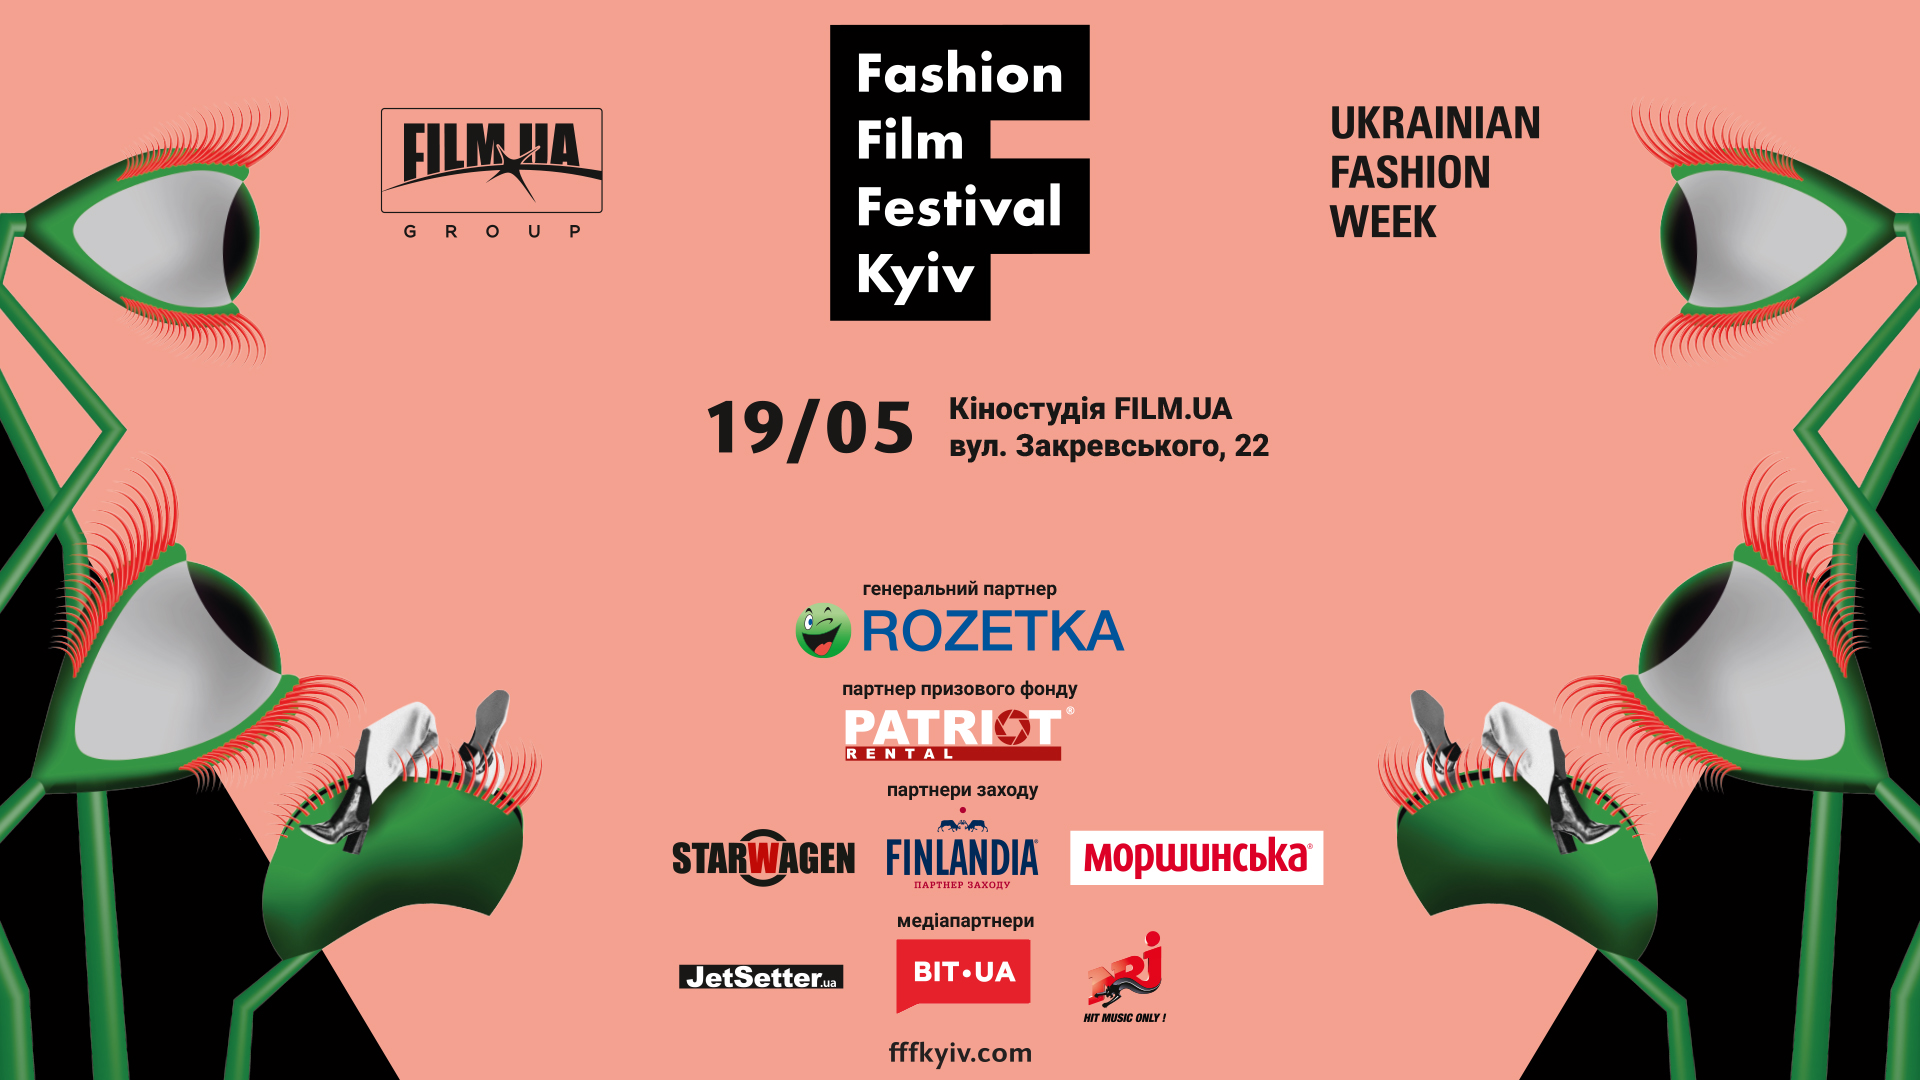 Must-see: фильмы финалистов конкурса Fashion Film Festival Kyiv 2018